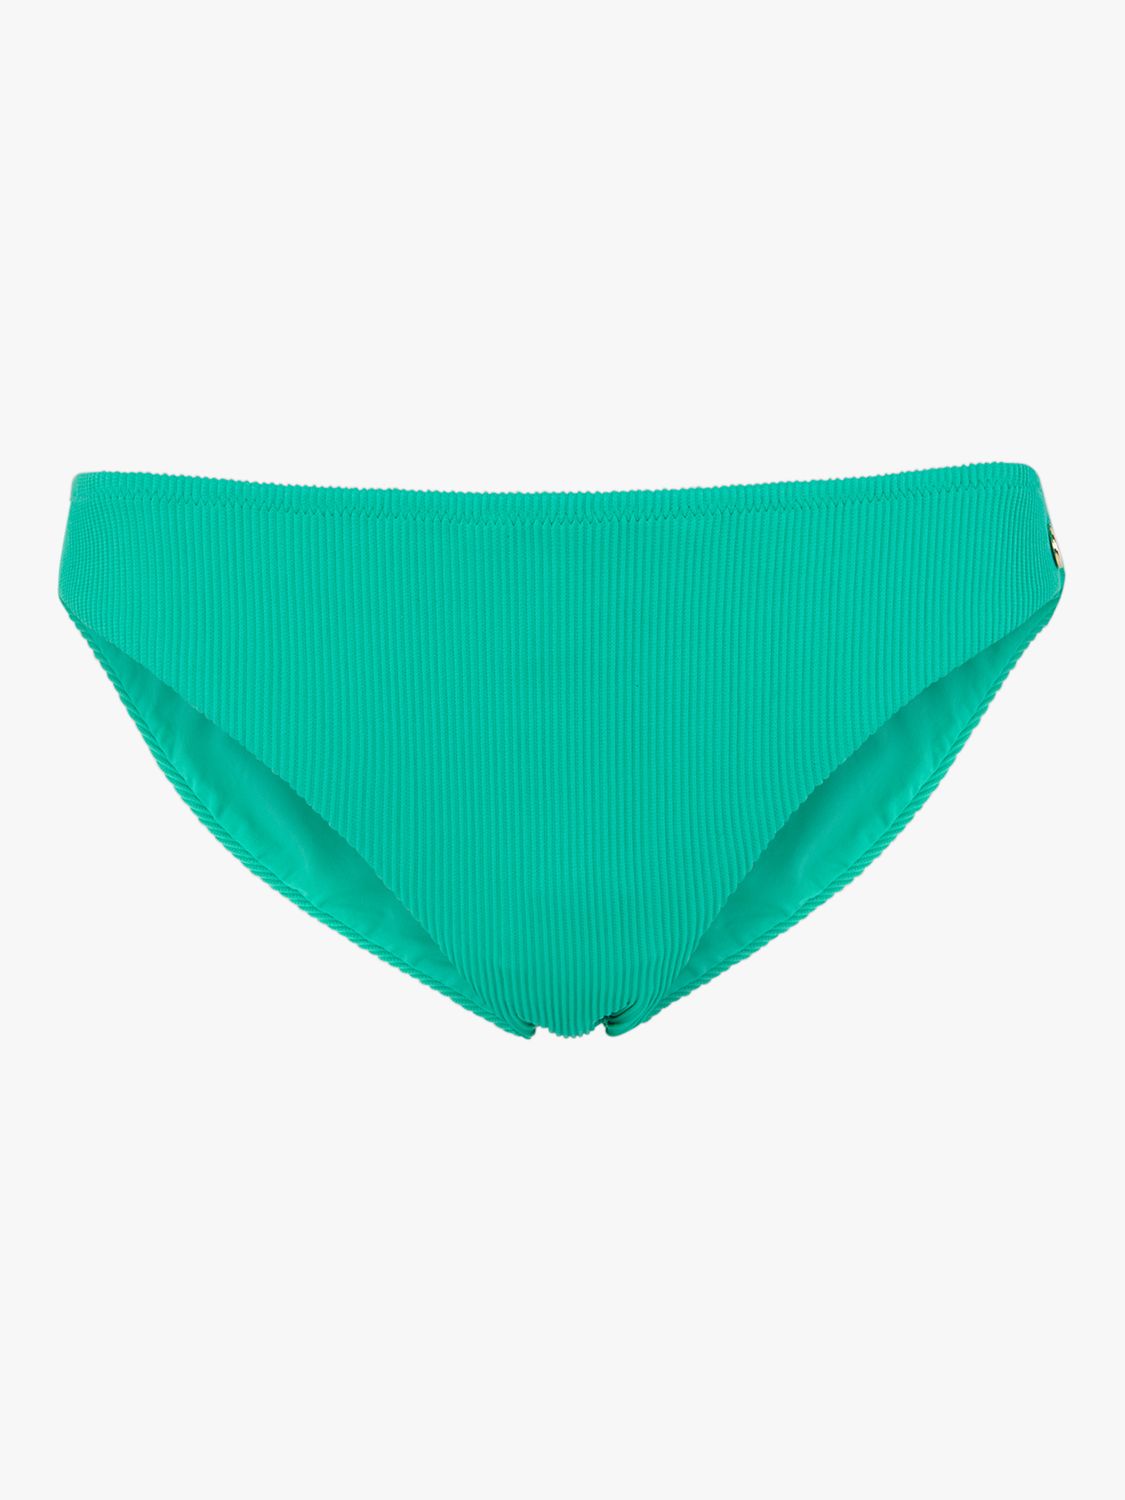 Whistles Ribbed Bikini Bottom, Green, 6